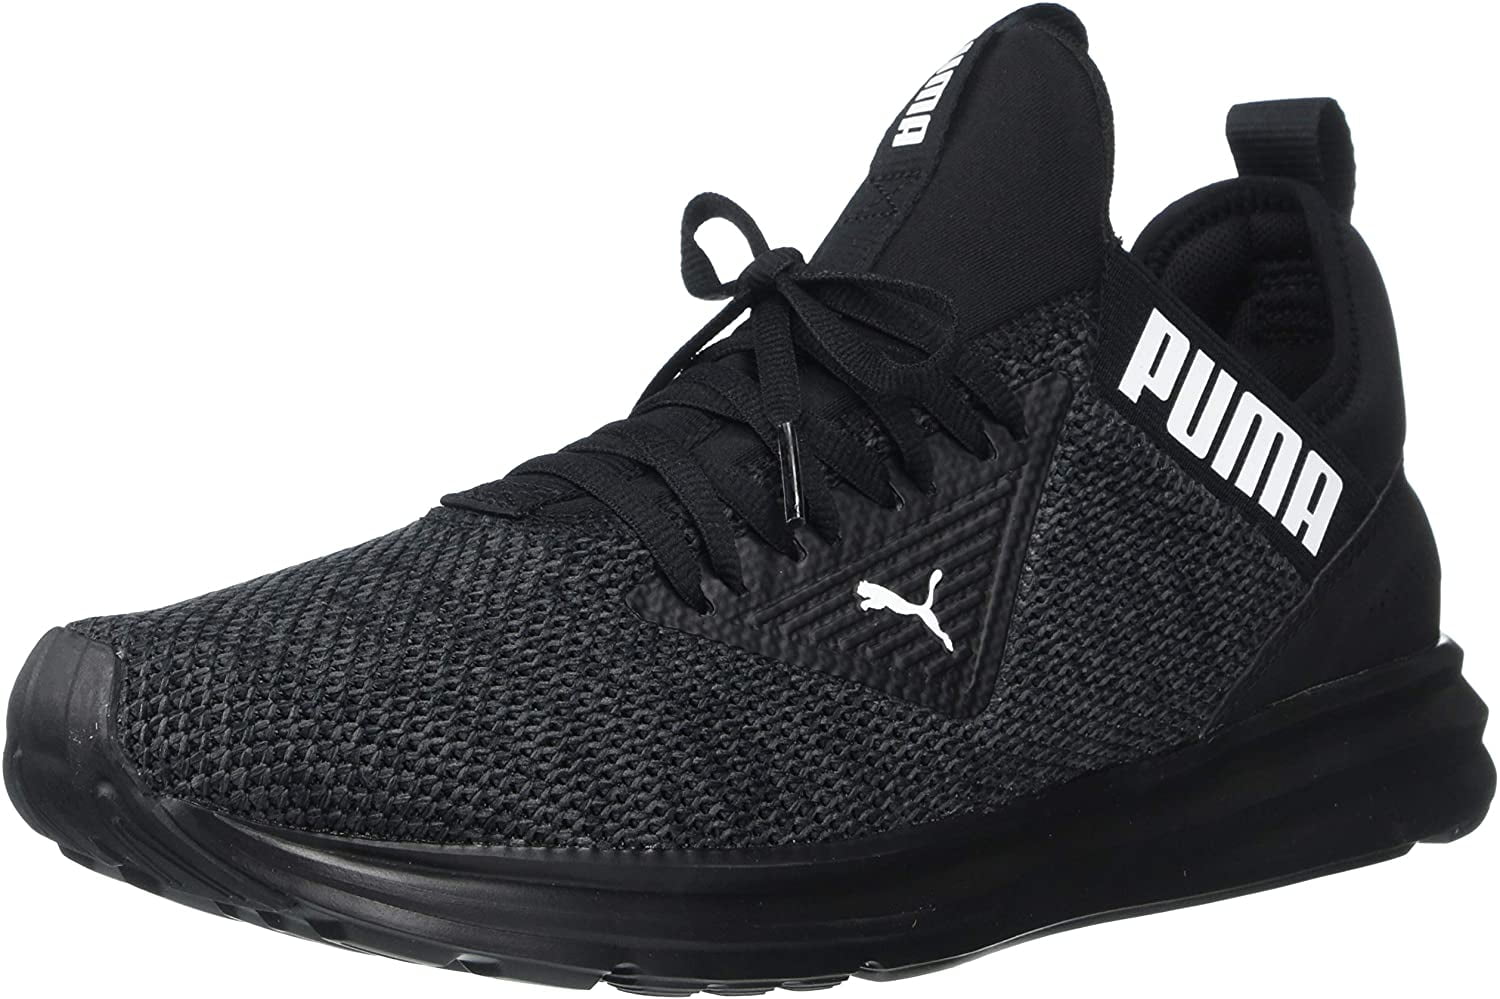 PUMA Men's Enzo Beta Woven C Shoes, Puma Black/Asphalt, Size 8 ...